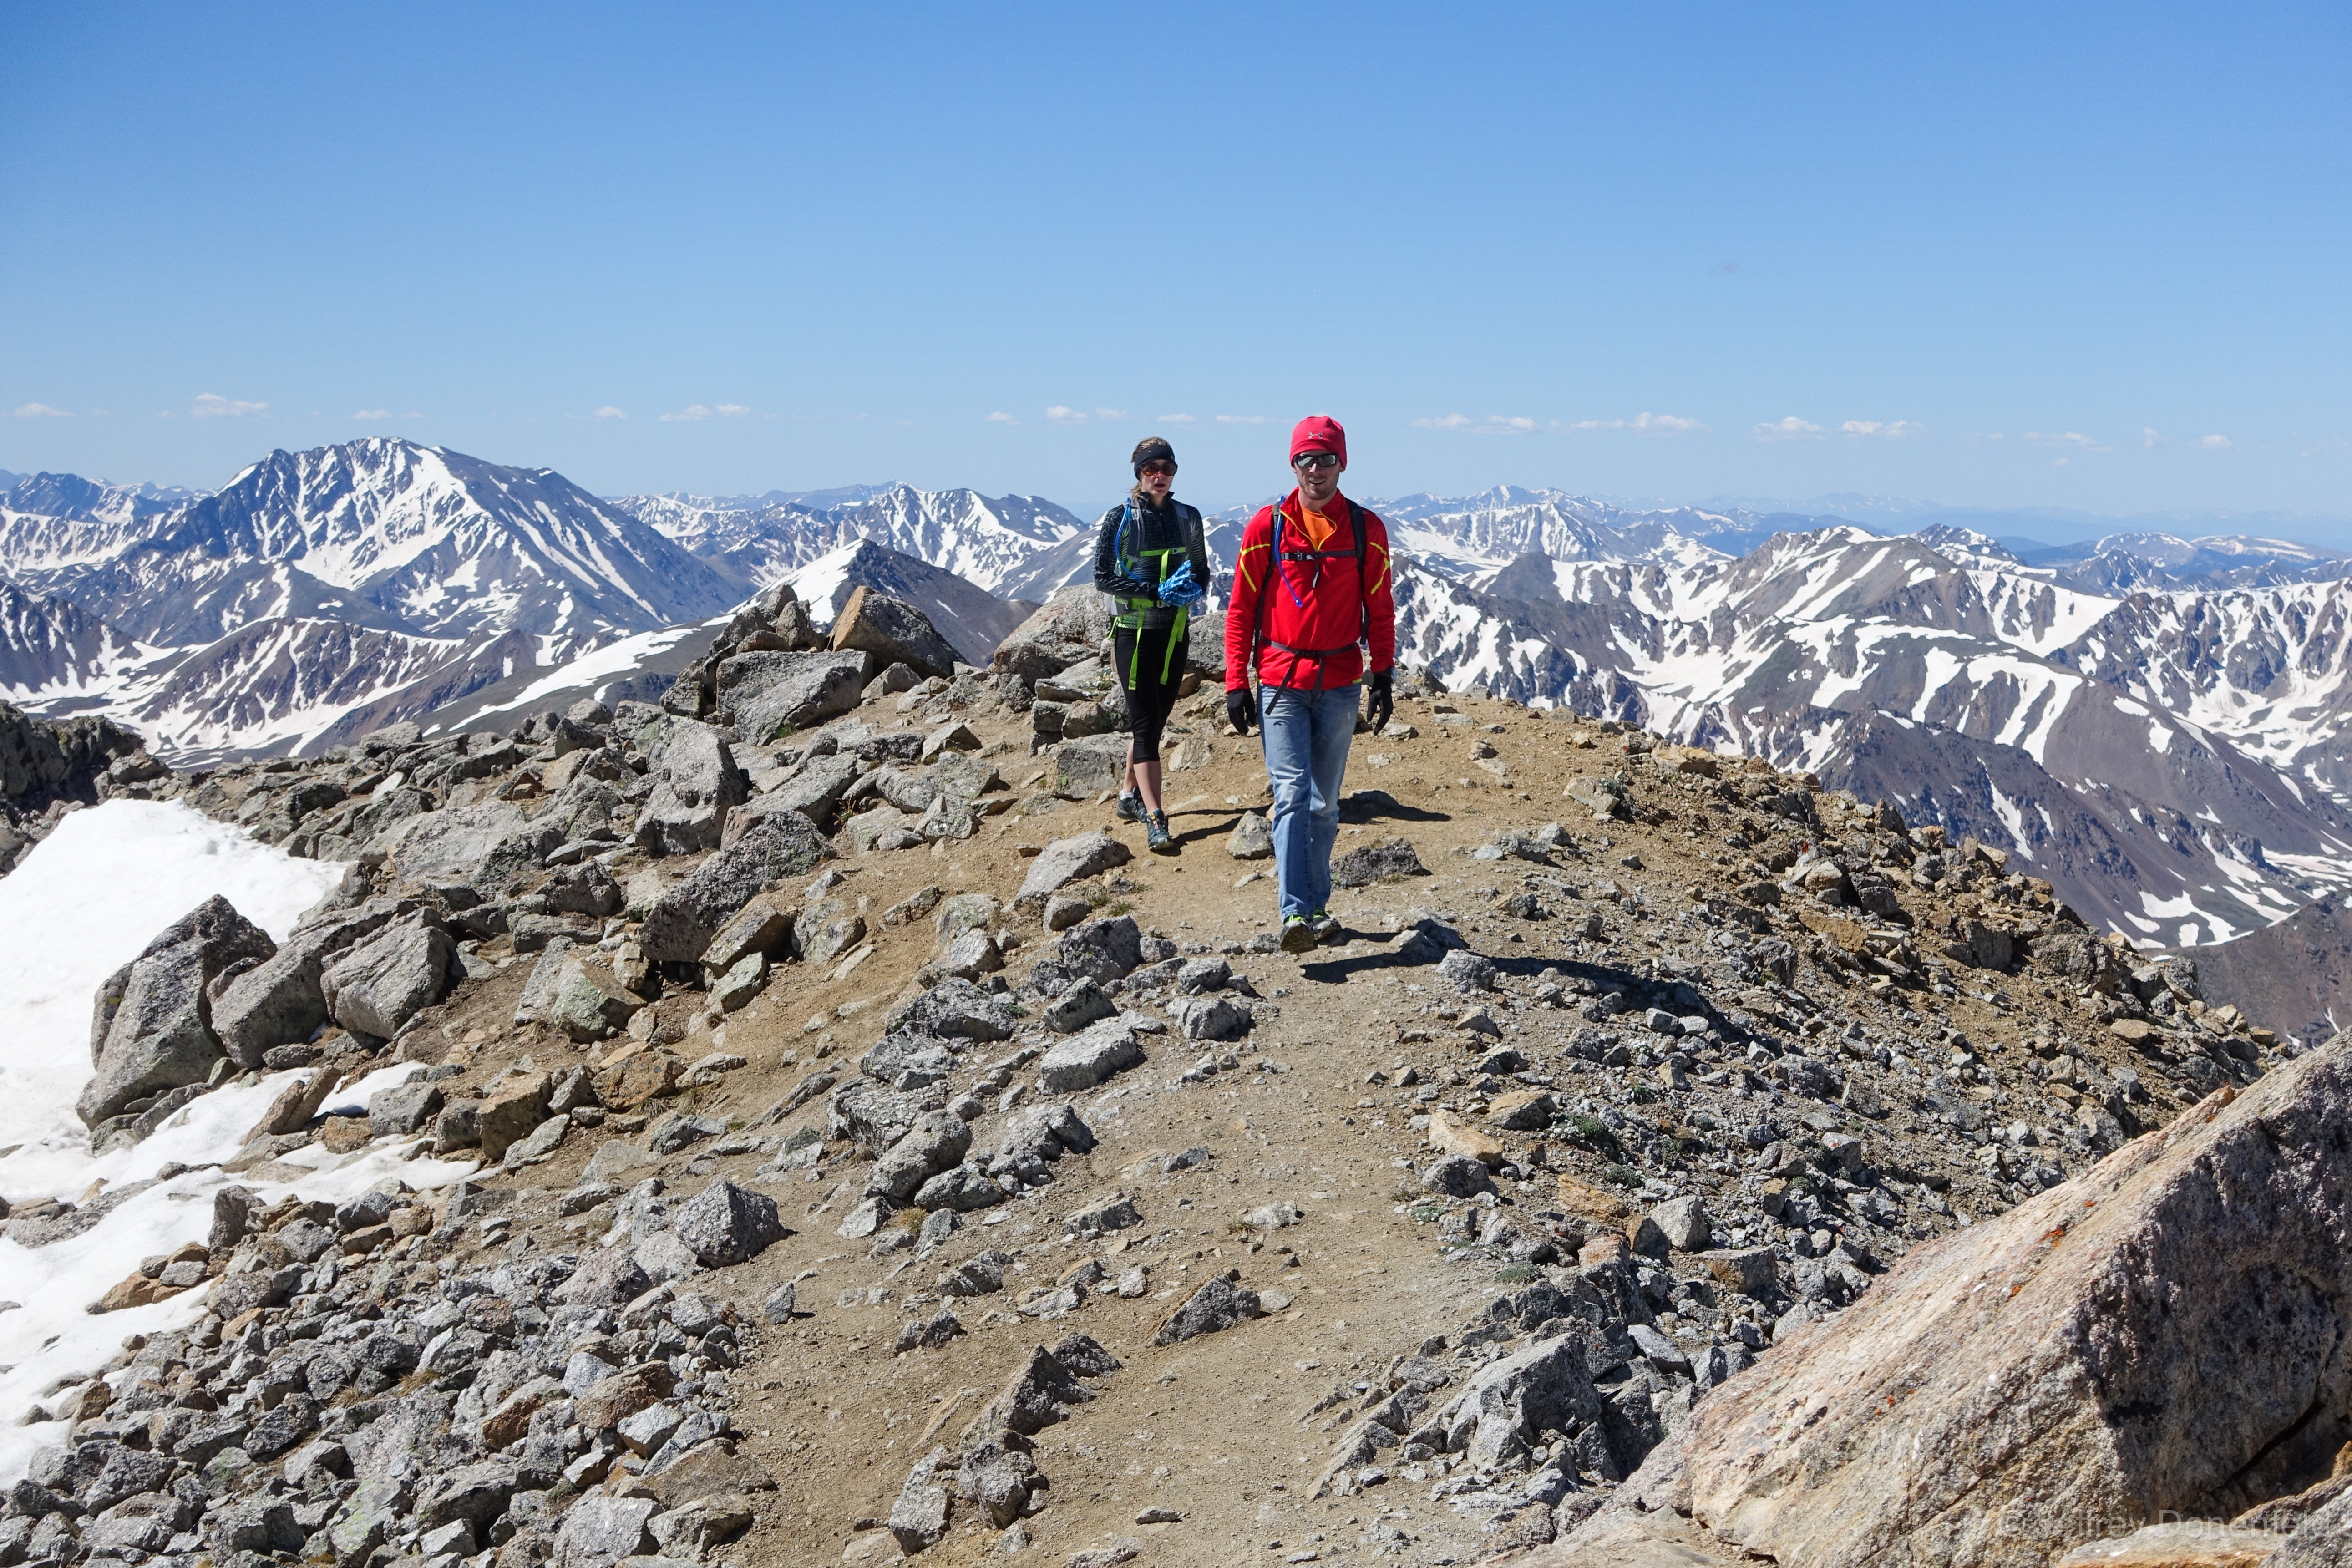 Climbing Colorado’s Mt. Massive – 14,429 Feet